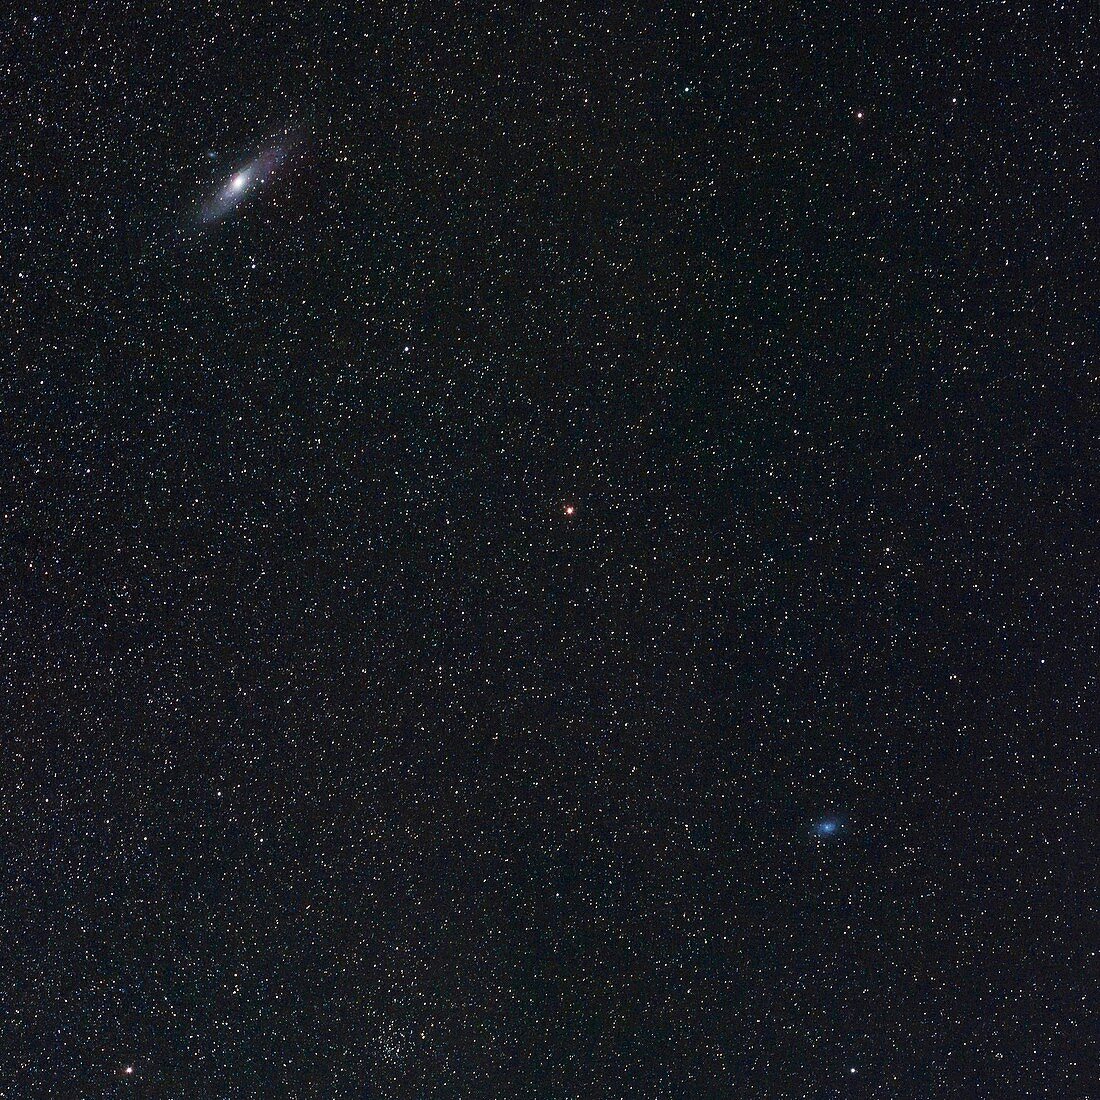 Andromeda and Triangulum galaxies